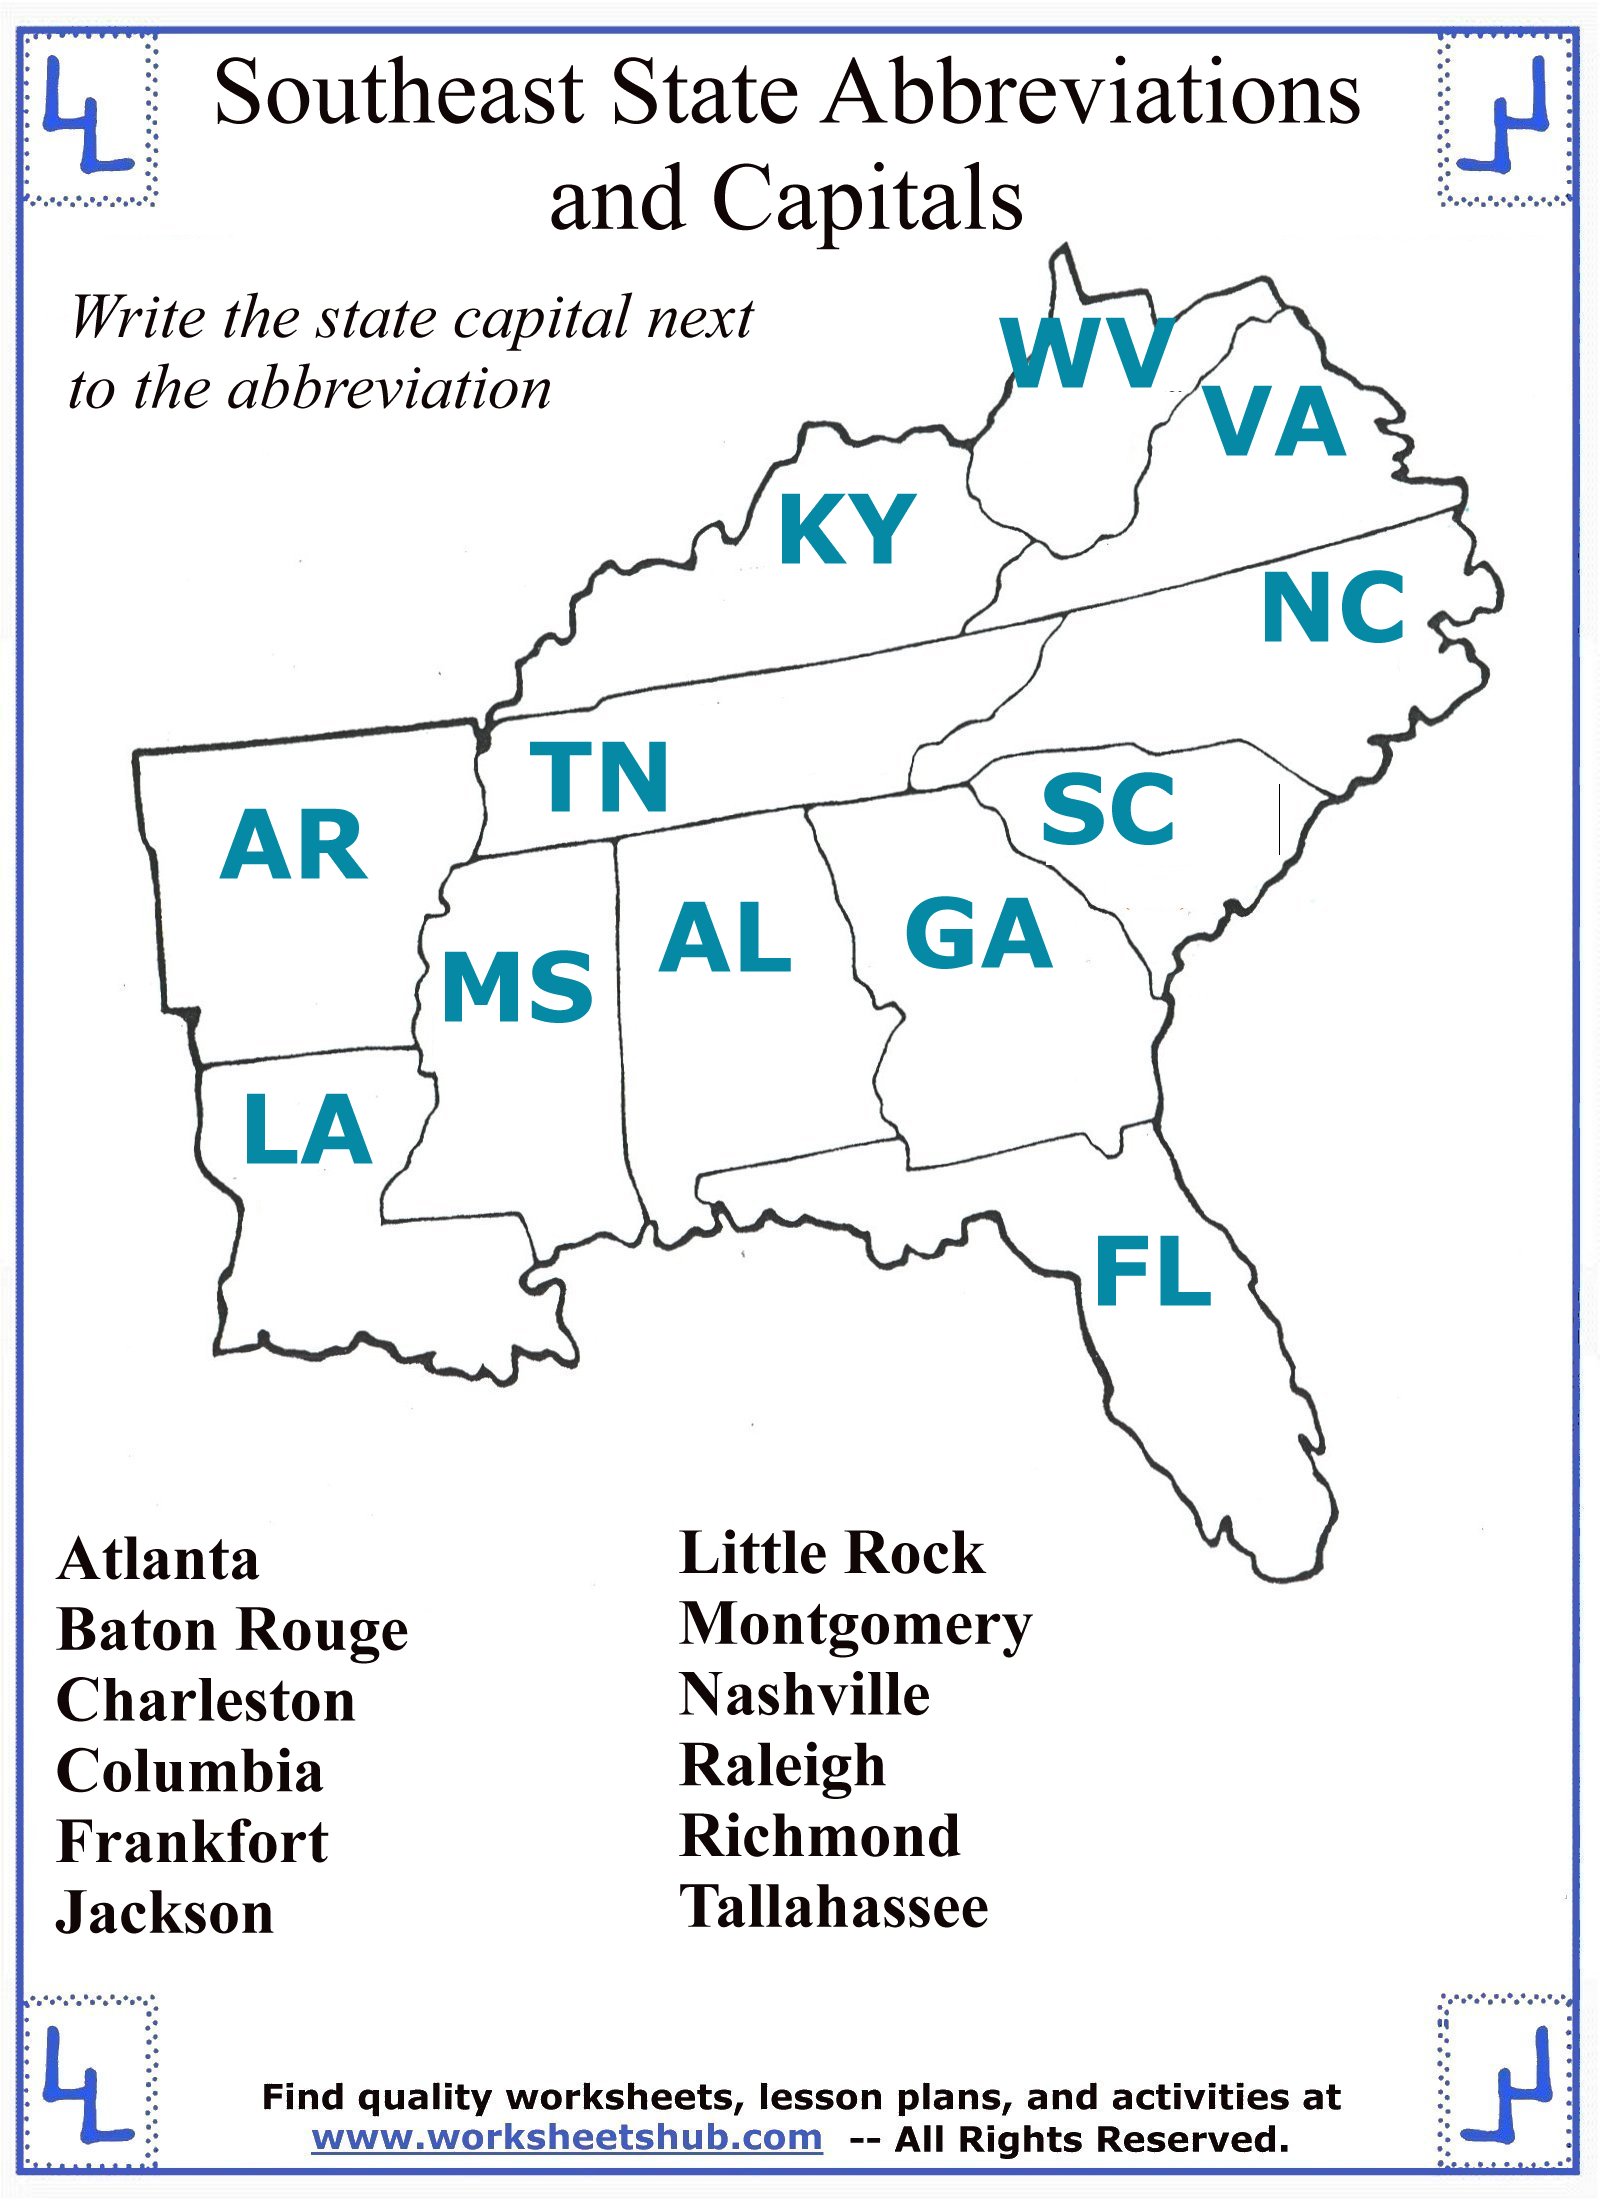 Southeast Region States And Capitals slidesharetrick